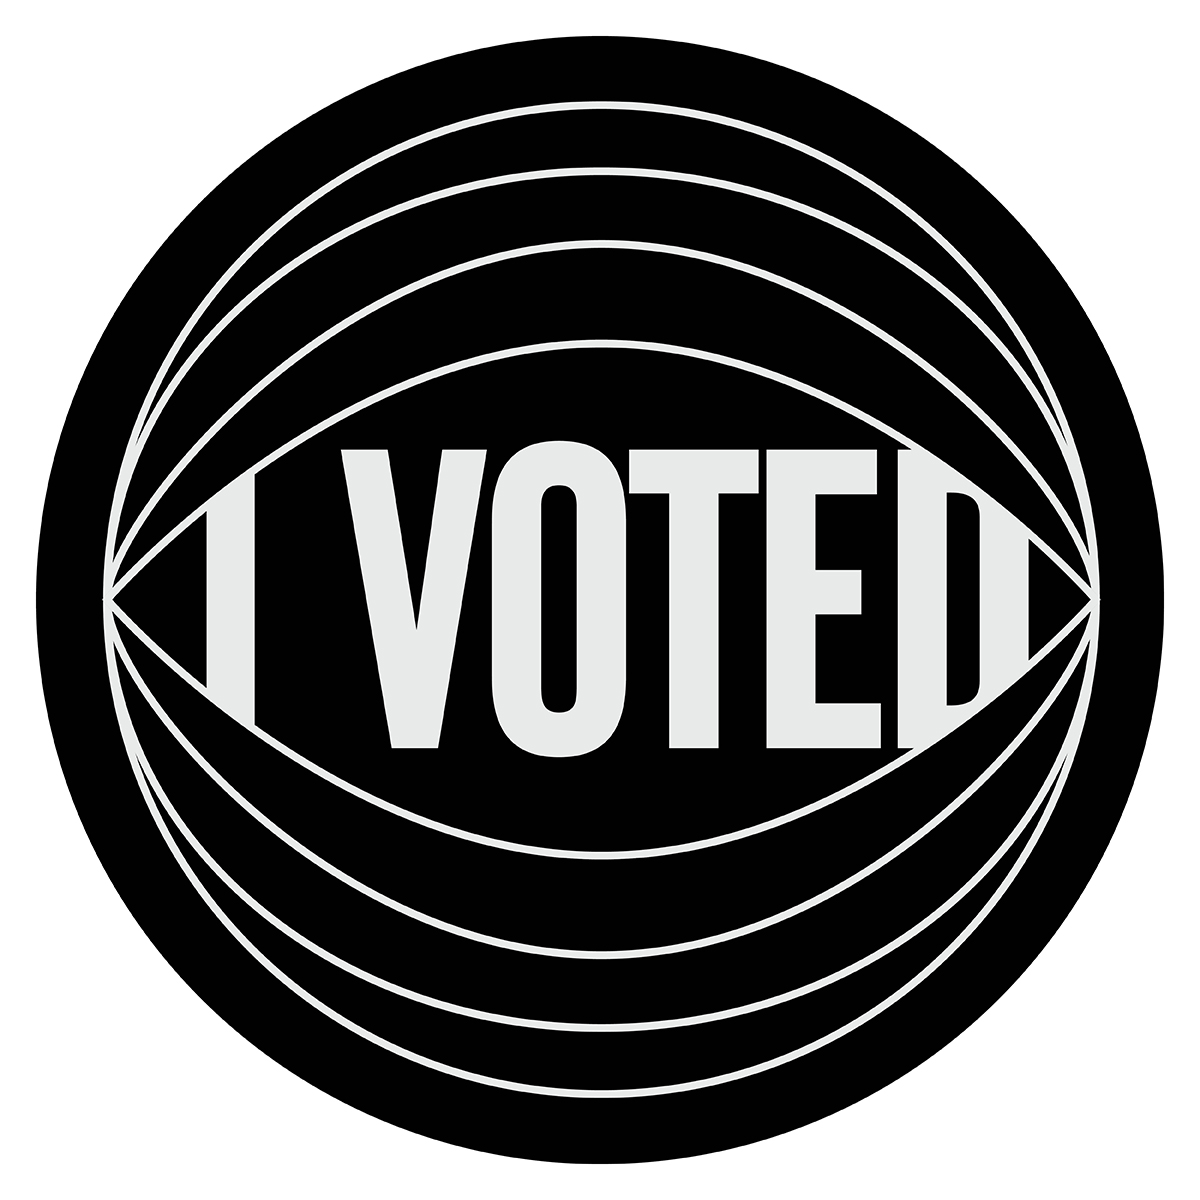 Hank Willis Thomas'I Voted' sticker, via New York Magazine.